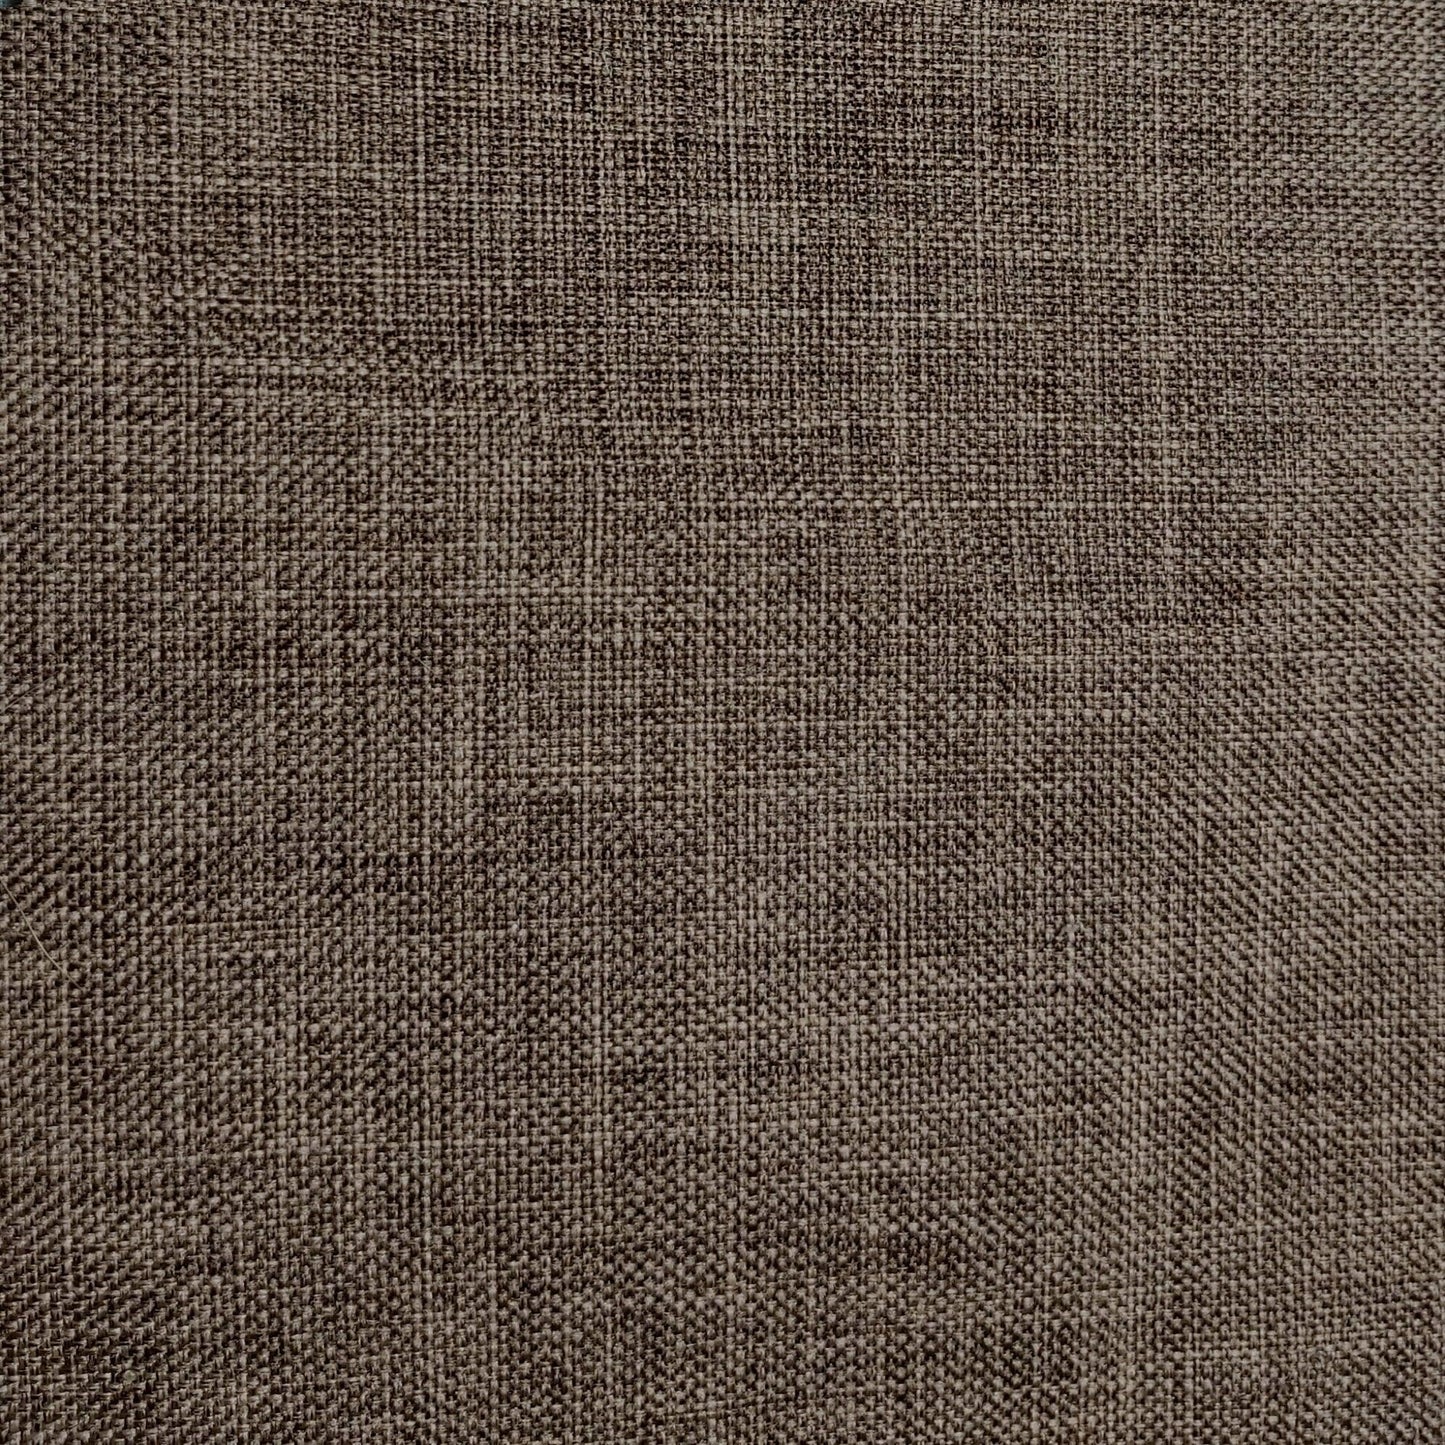 Smooth Upholstery Fabric Sun Yat-Sen Charcoal Brown Mix